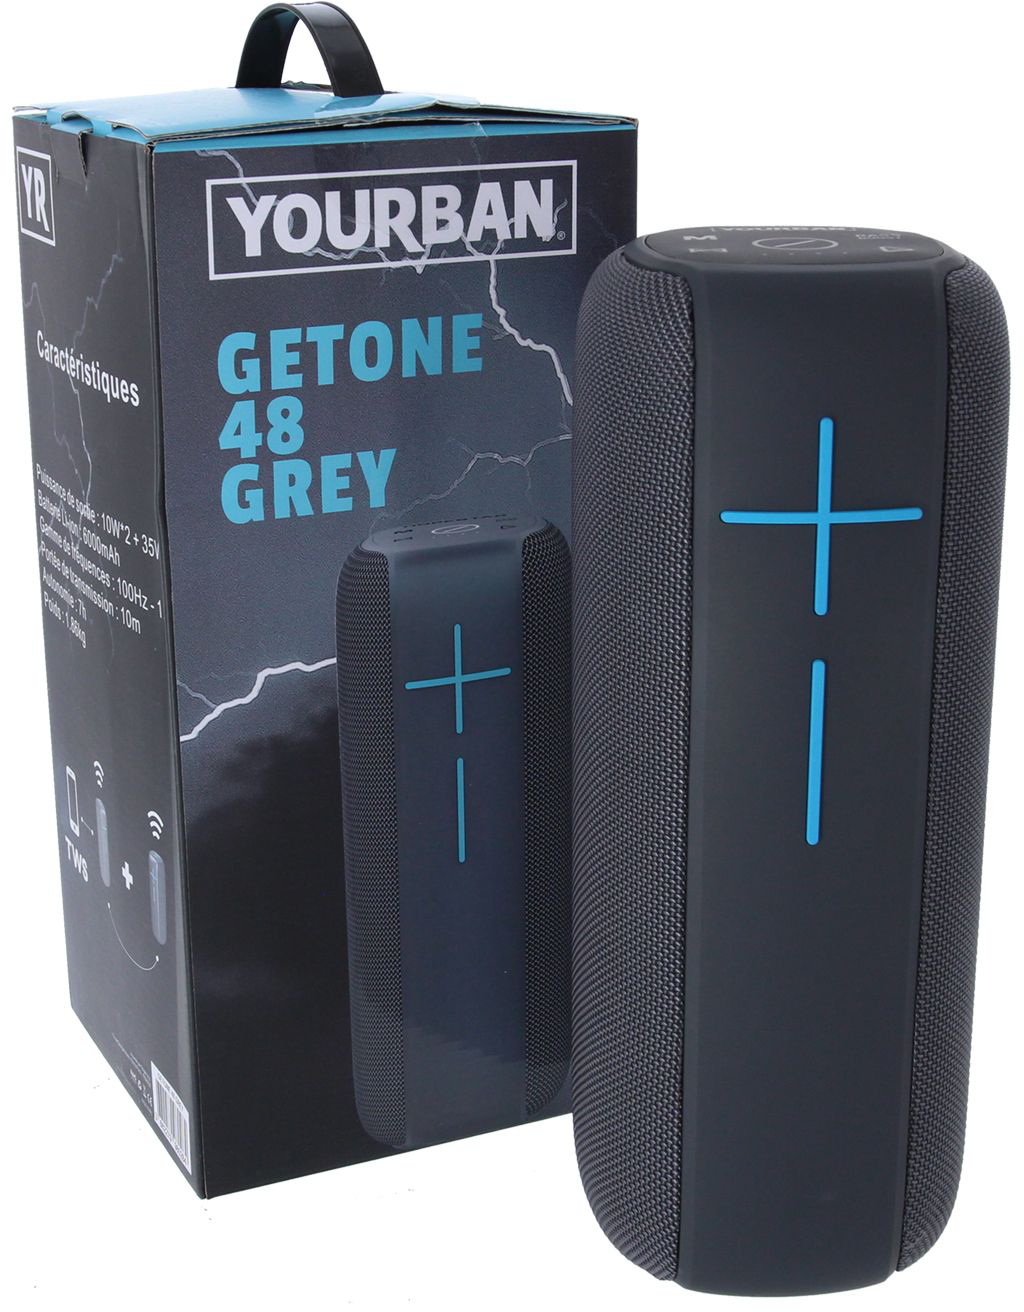 Yourban Getone 48 Grey - Portable PA system - Variation 5